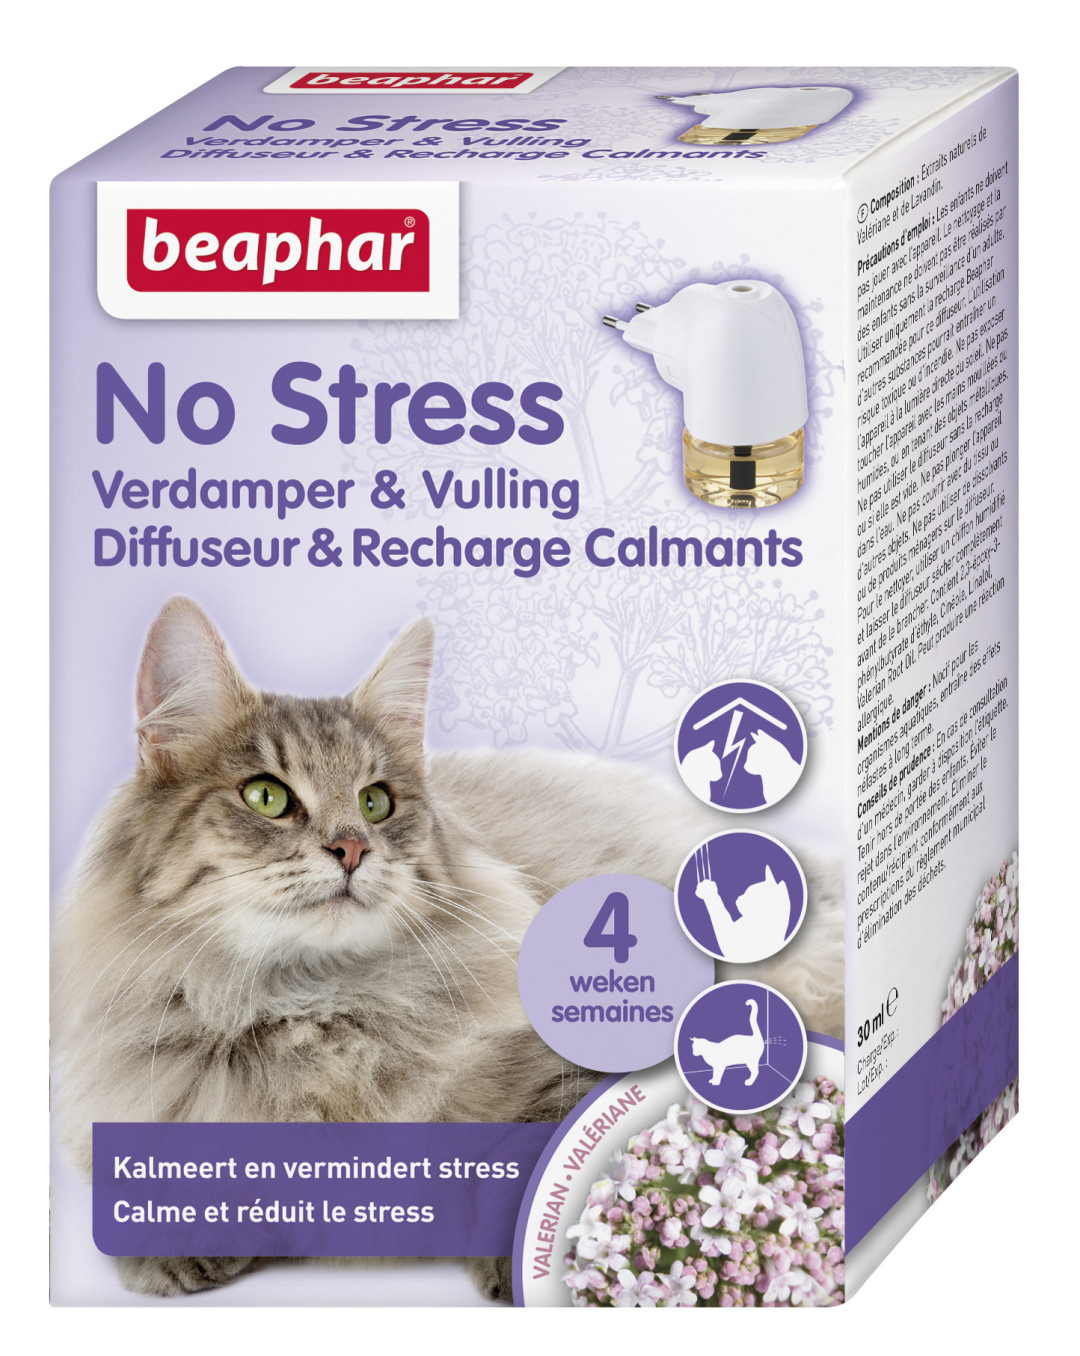 Beaphar No Stress verdamper & vulling kat